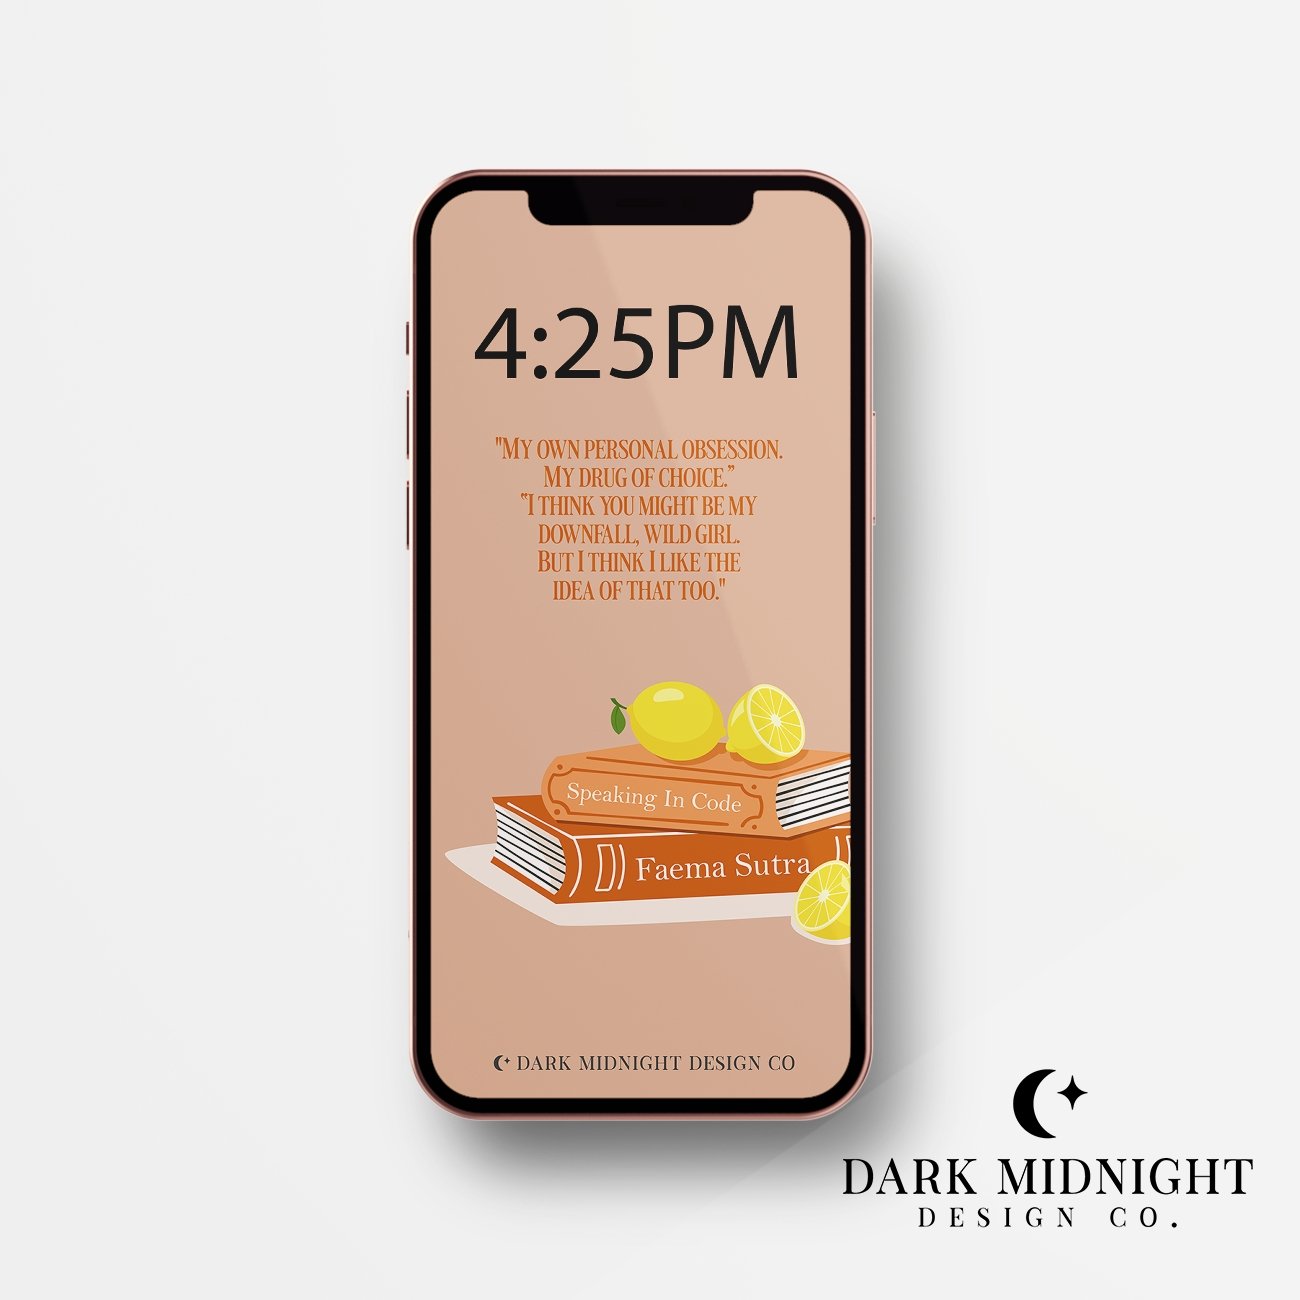 Character Anthology Phone Wallpaper - Sin Wilder - Officially Licensed Darkmore Penitentiary Phone Wallpaper - Dark Midnight Design Co